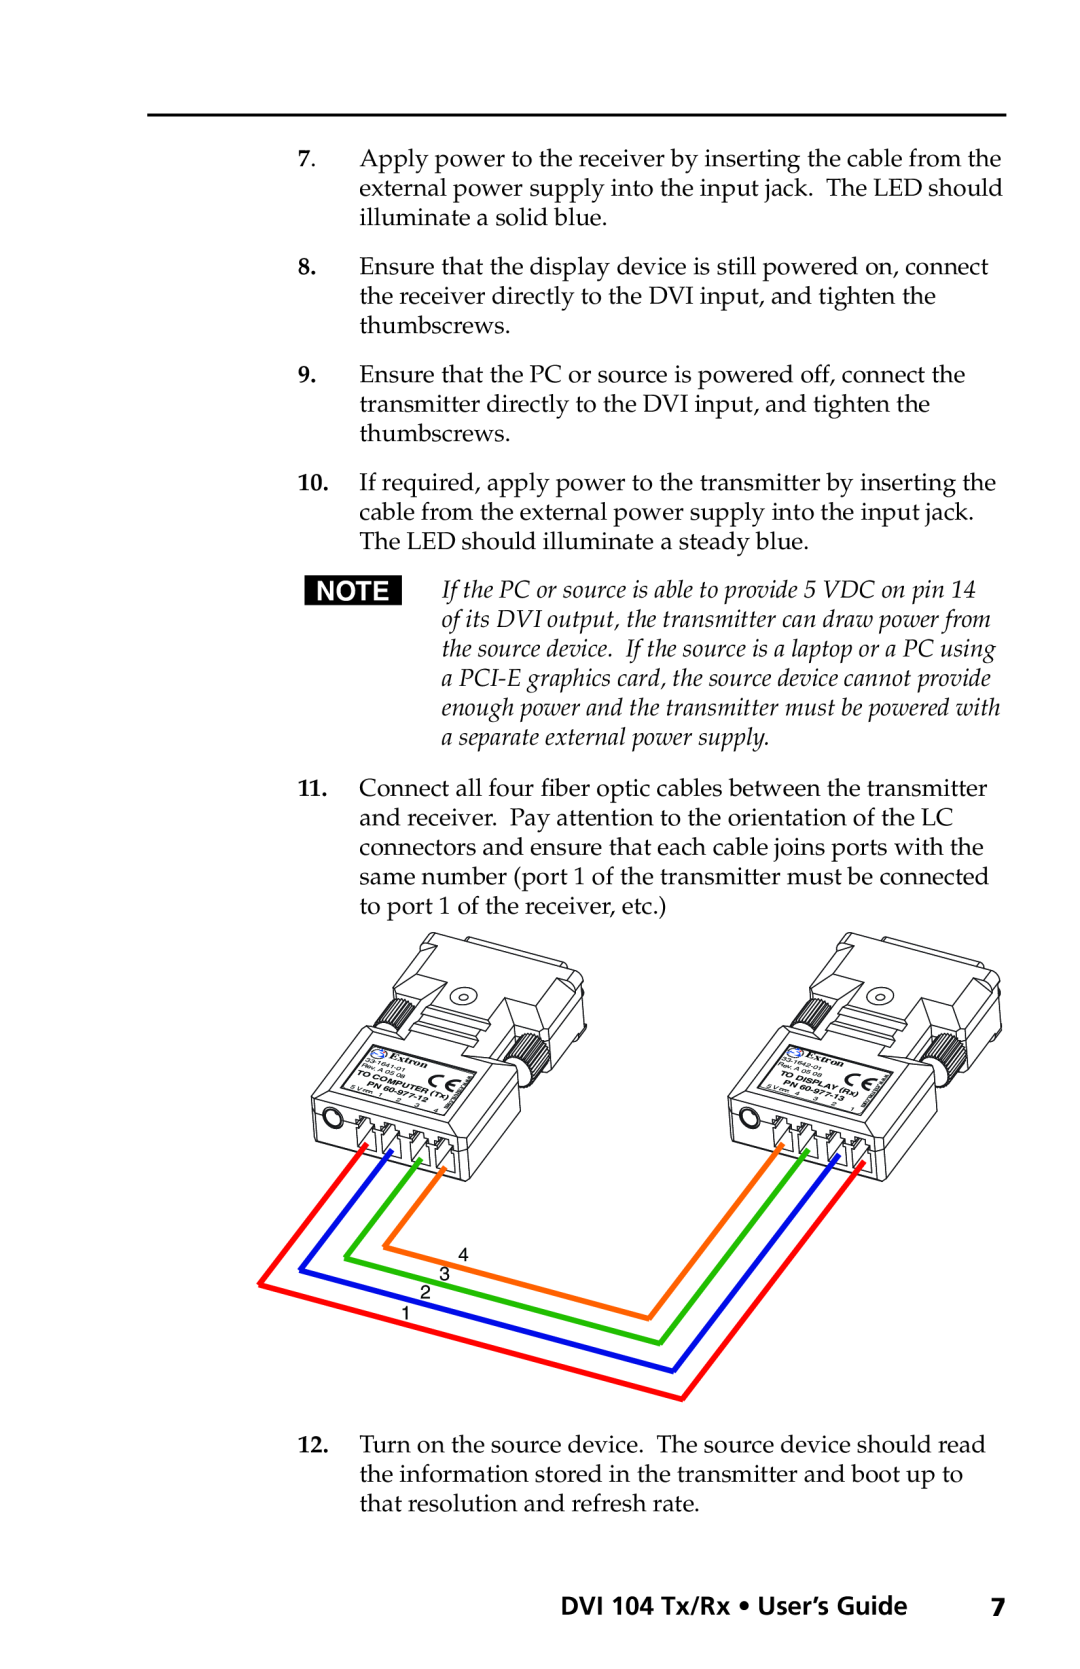 Extron electronic manual DVI 104 Tx/Rx User’s Guide, Extr 